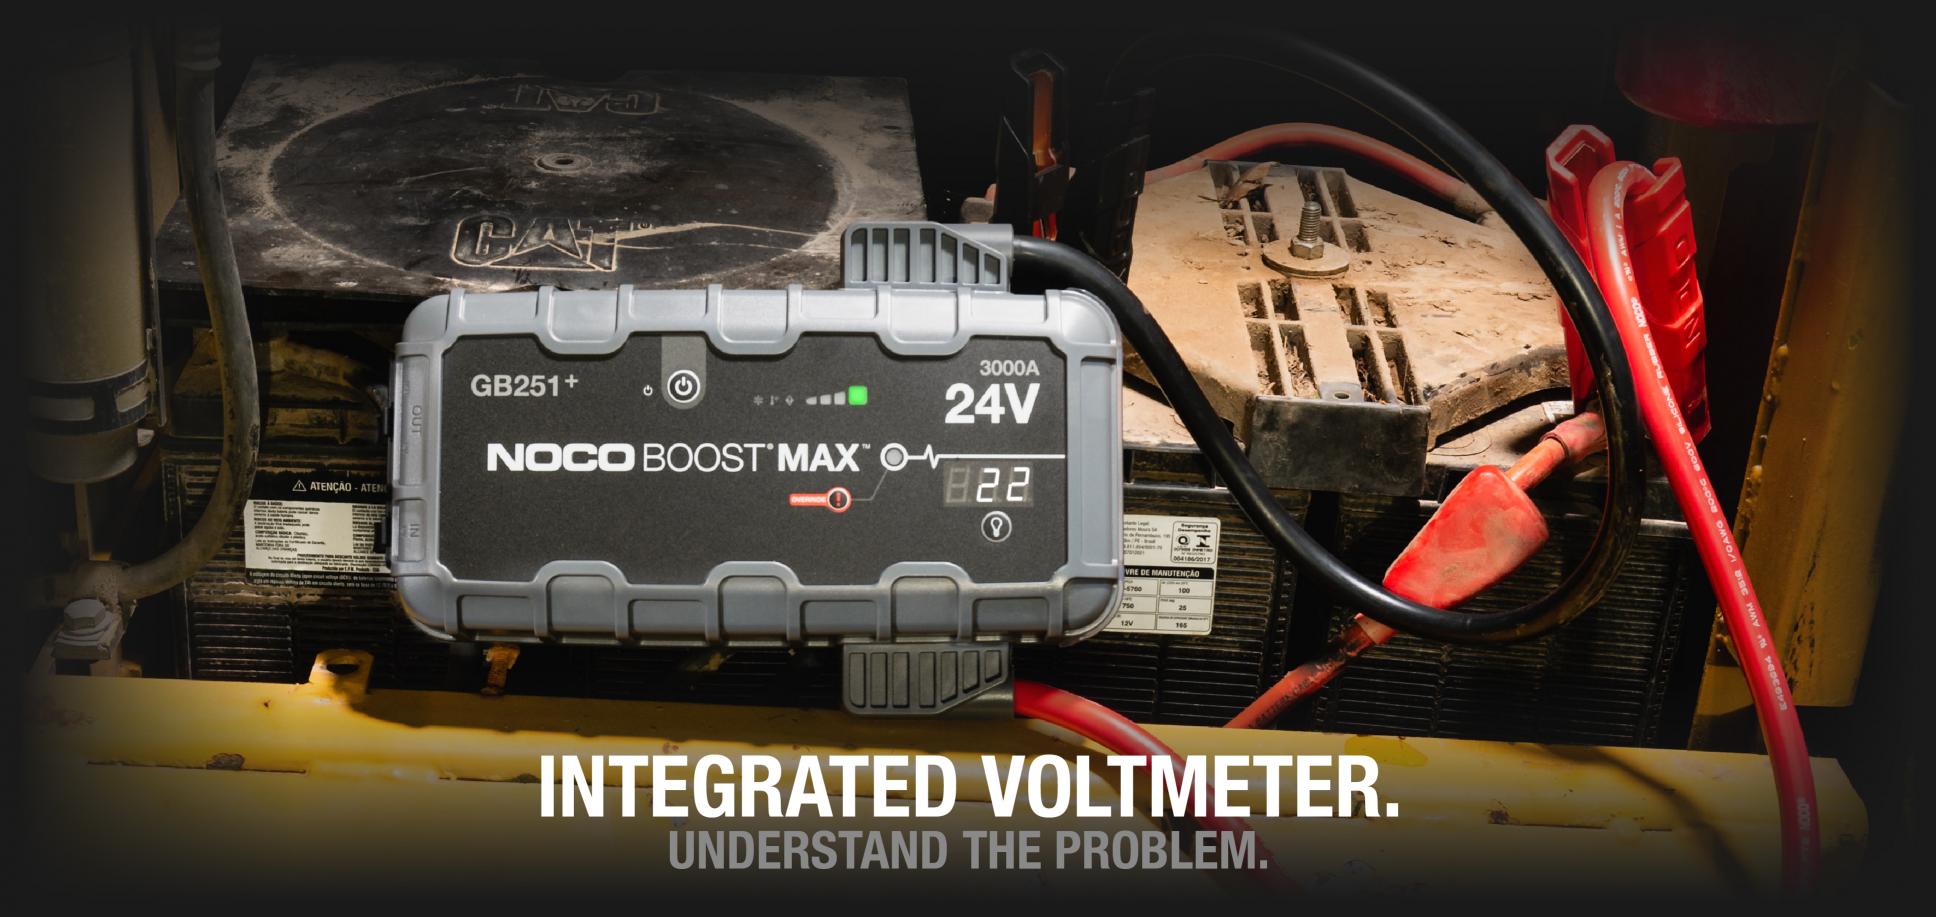 Lithium jump starter Noco GB251. Integrated voltmeter. Understand the problem